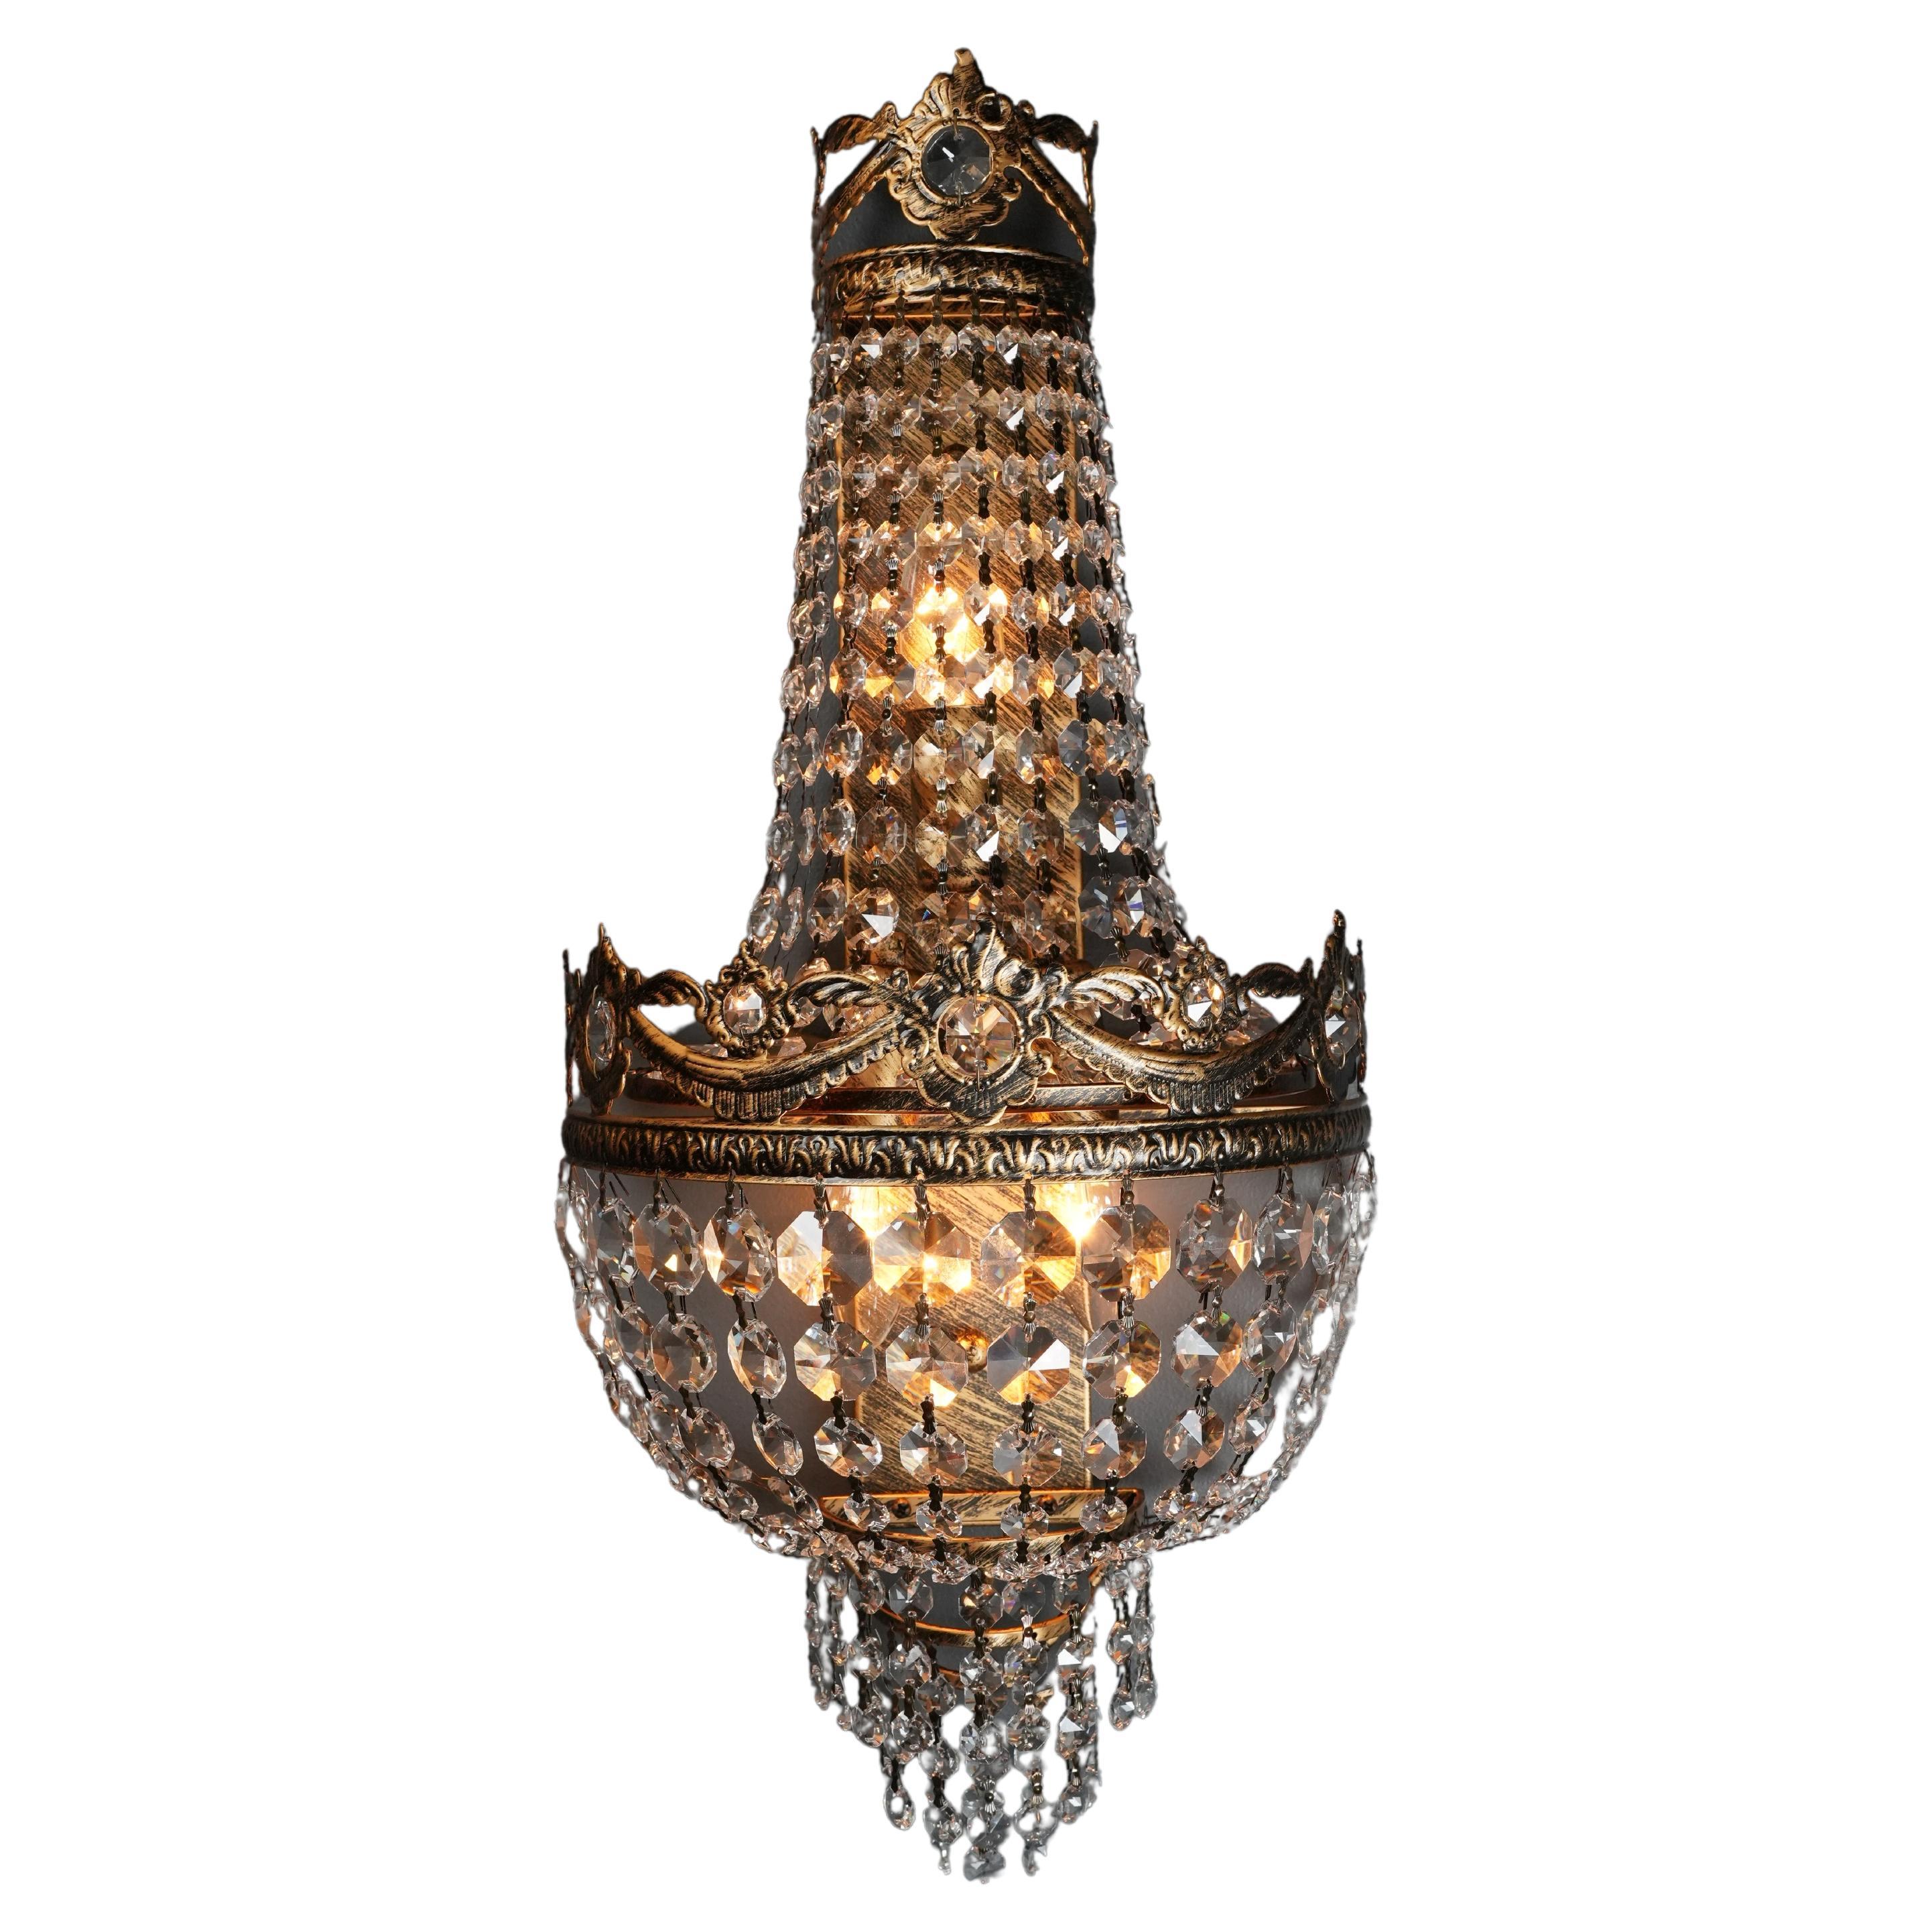 Antike Wandlampe Art Deco Art Nouveau Classic Dekoration mit Kristallen